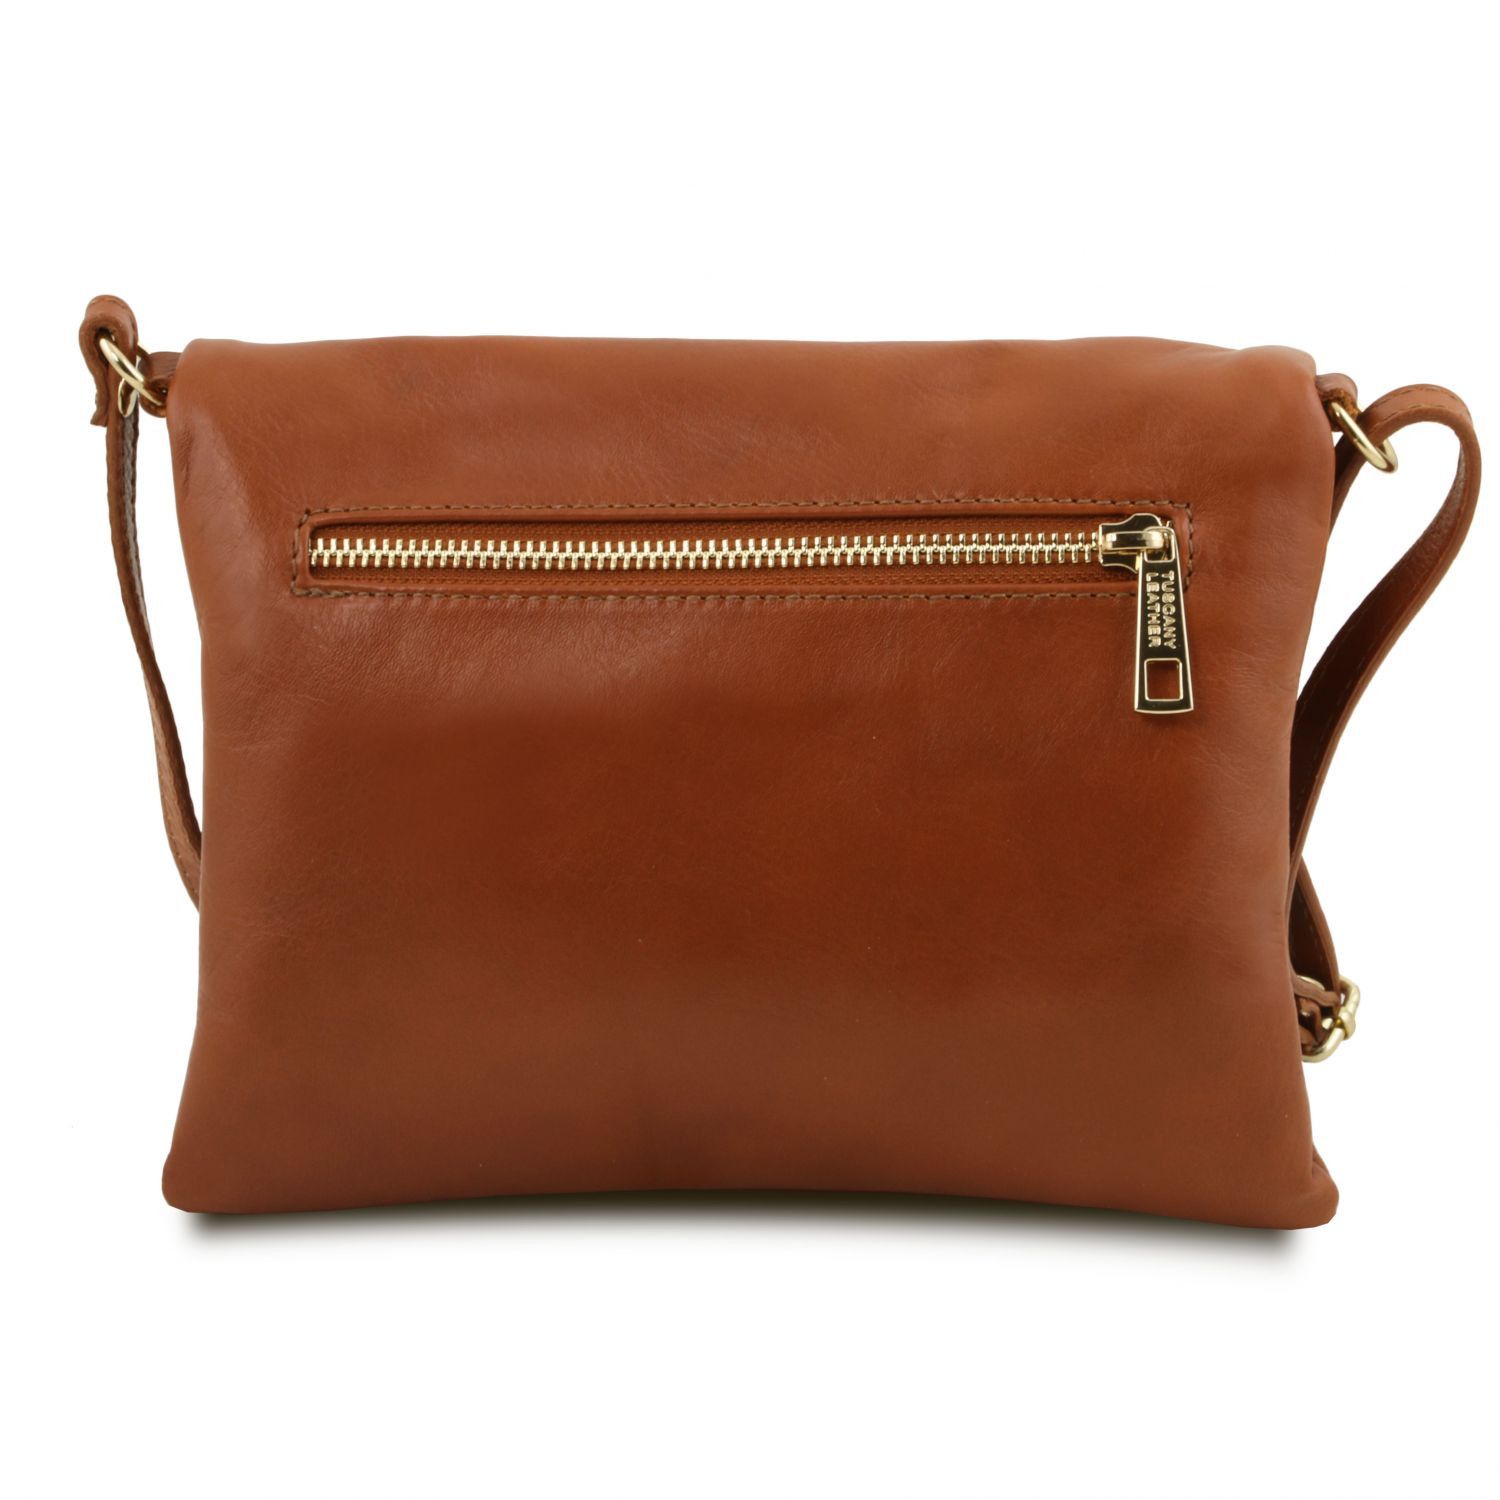 TL Young bag - Shoulder bag With Tassel Detail Cognac TL141153